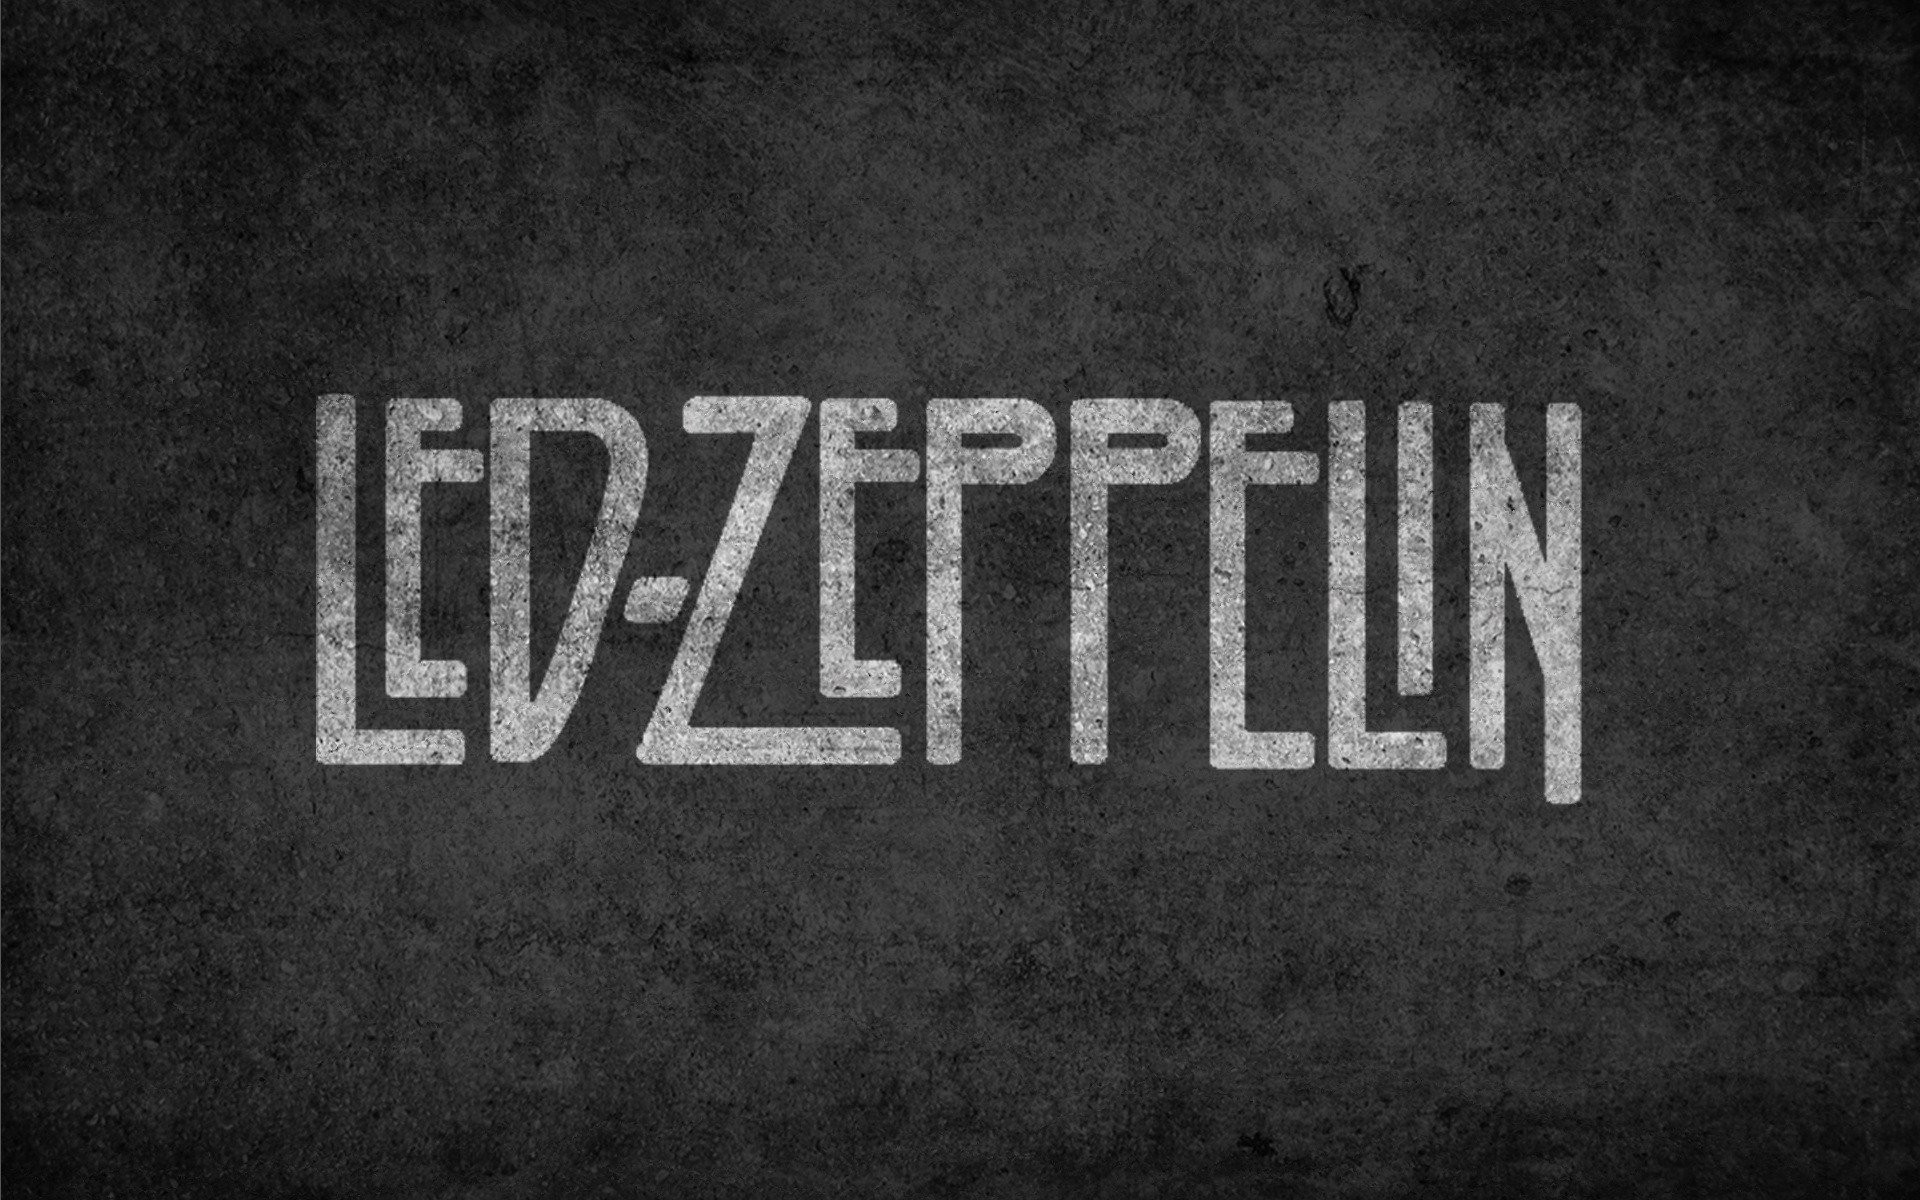 1920x1200 music the group led zeppelin led zeppelin legends rock rock music  background wallpaper HD wallpaper